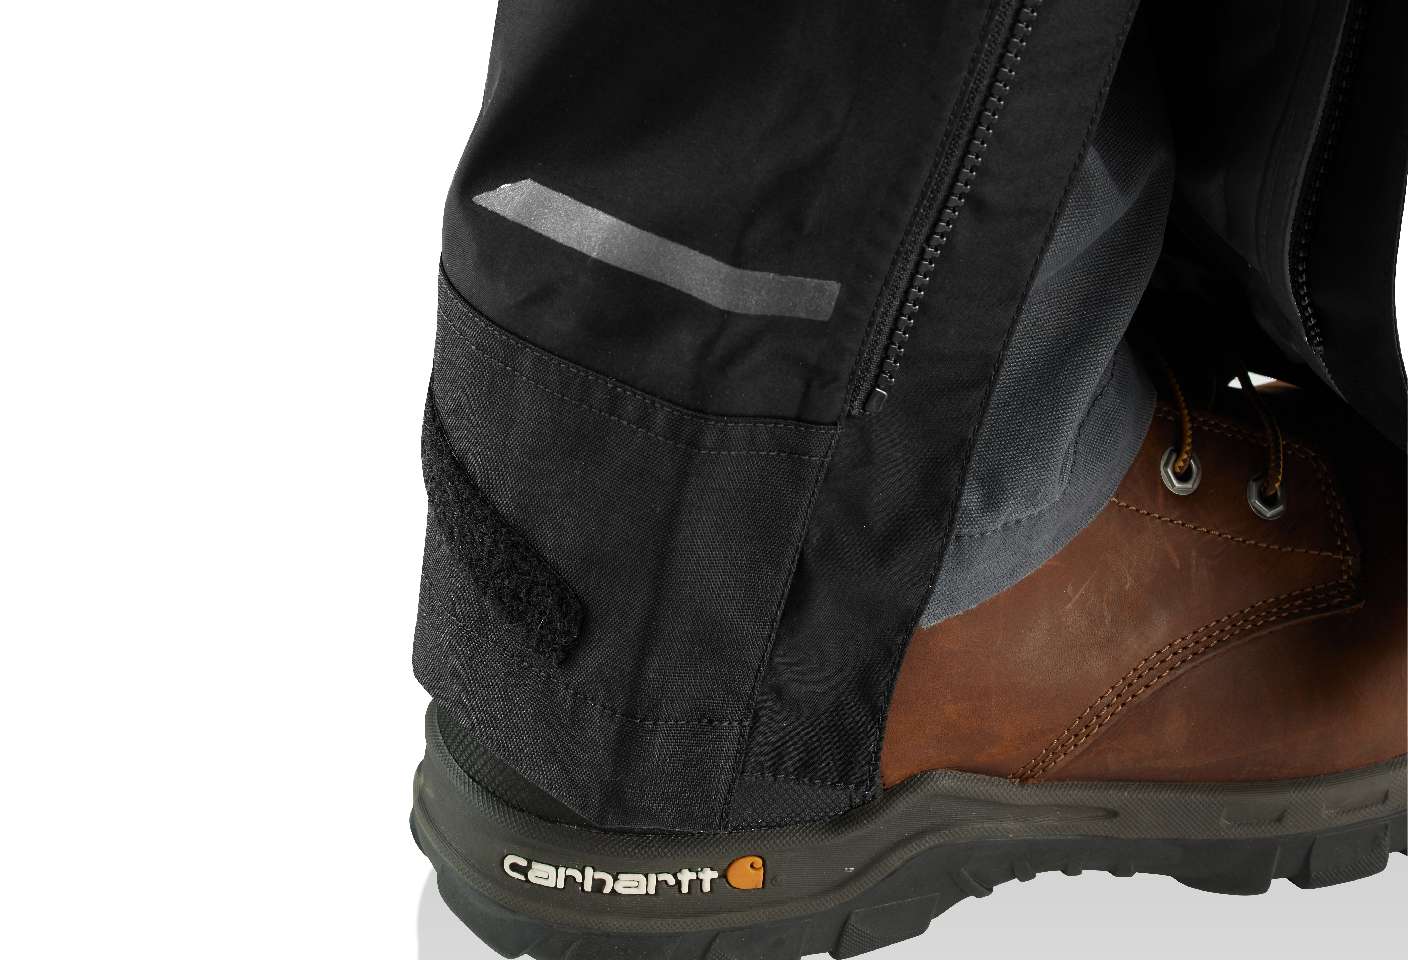 Cordura® reinforced kick panels for maximum wear and tear